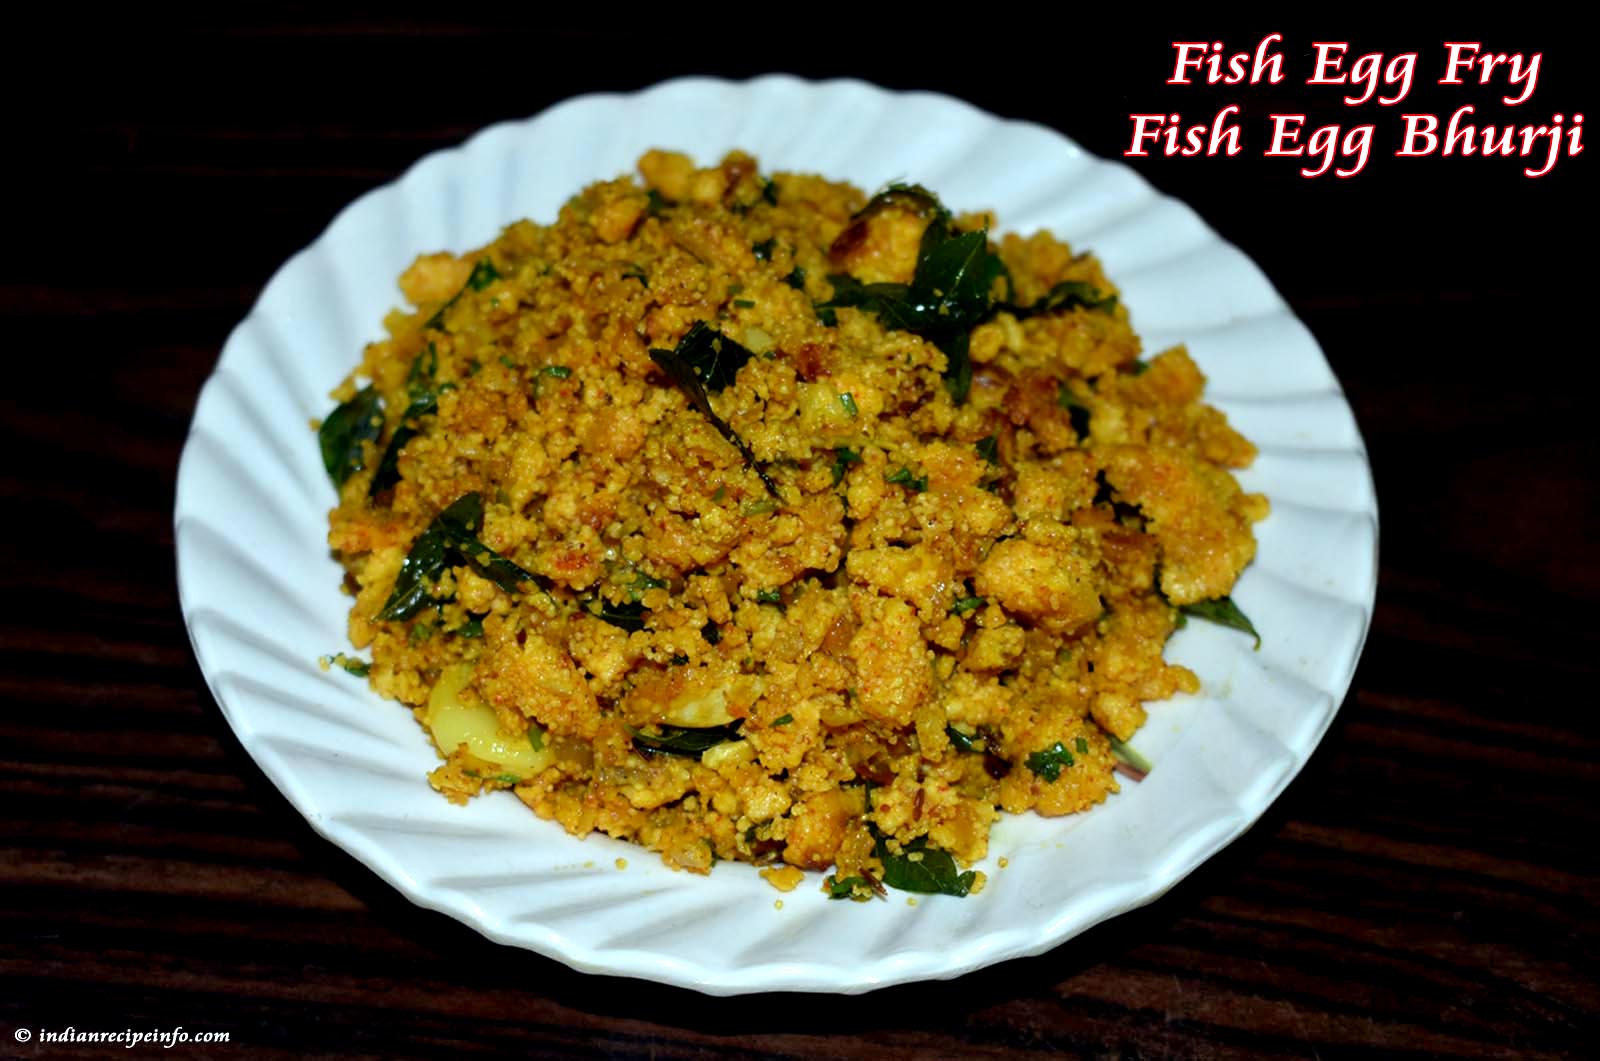 Fish Egg Fry Snack, Scrambled Fish Egg Bhurji Recipe - Indian Recipe Info